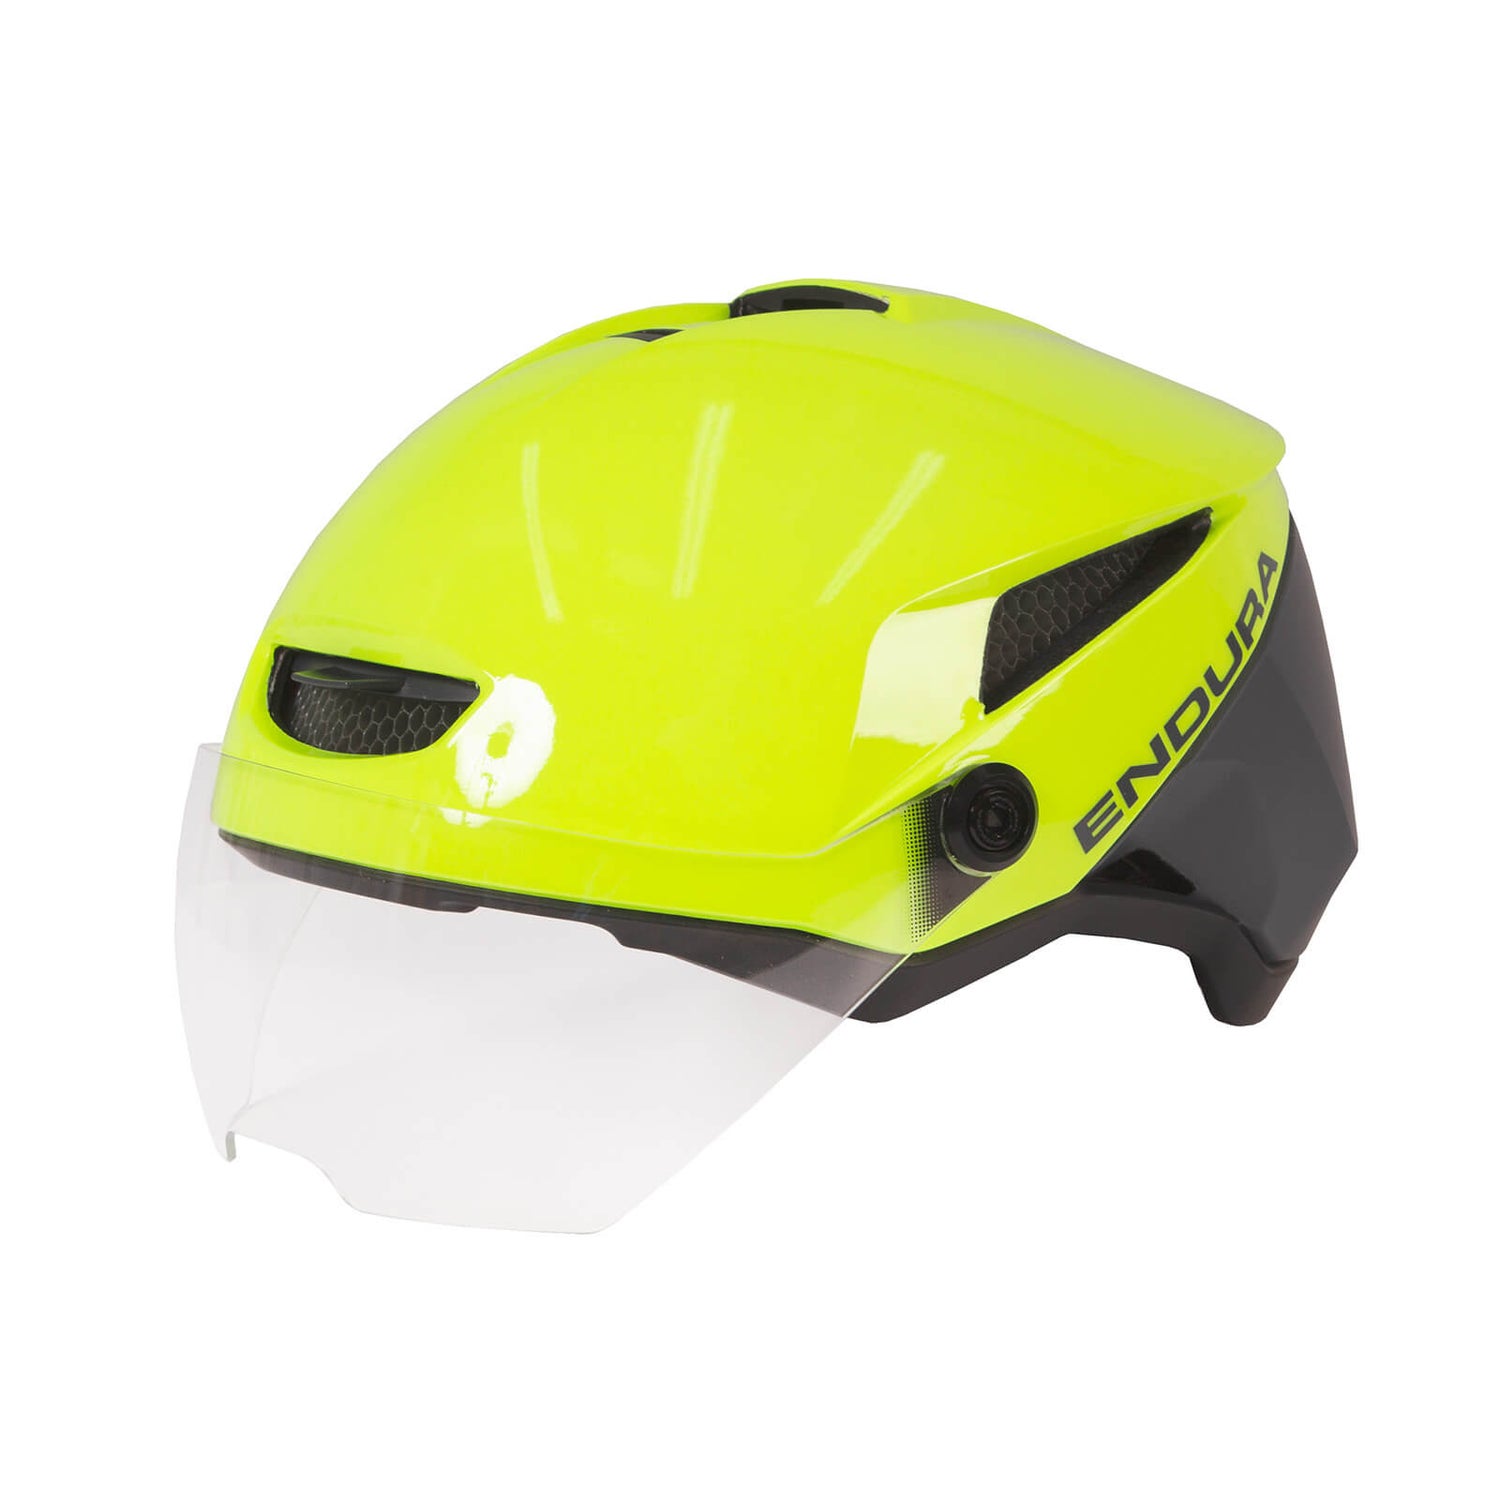 SpeedPedelec Visor Helmet - Hi-Viz Yellow - S-M